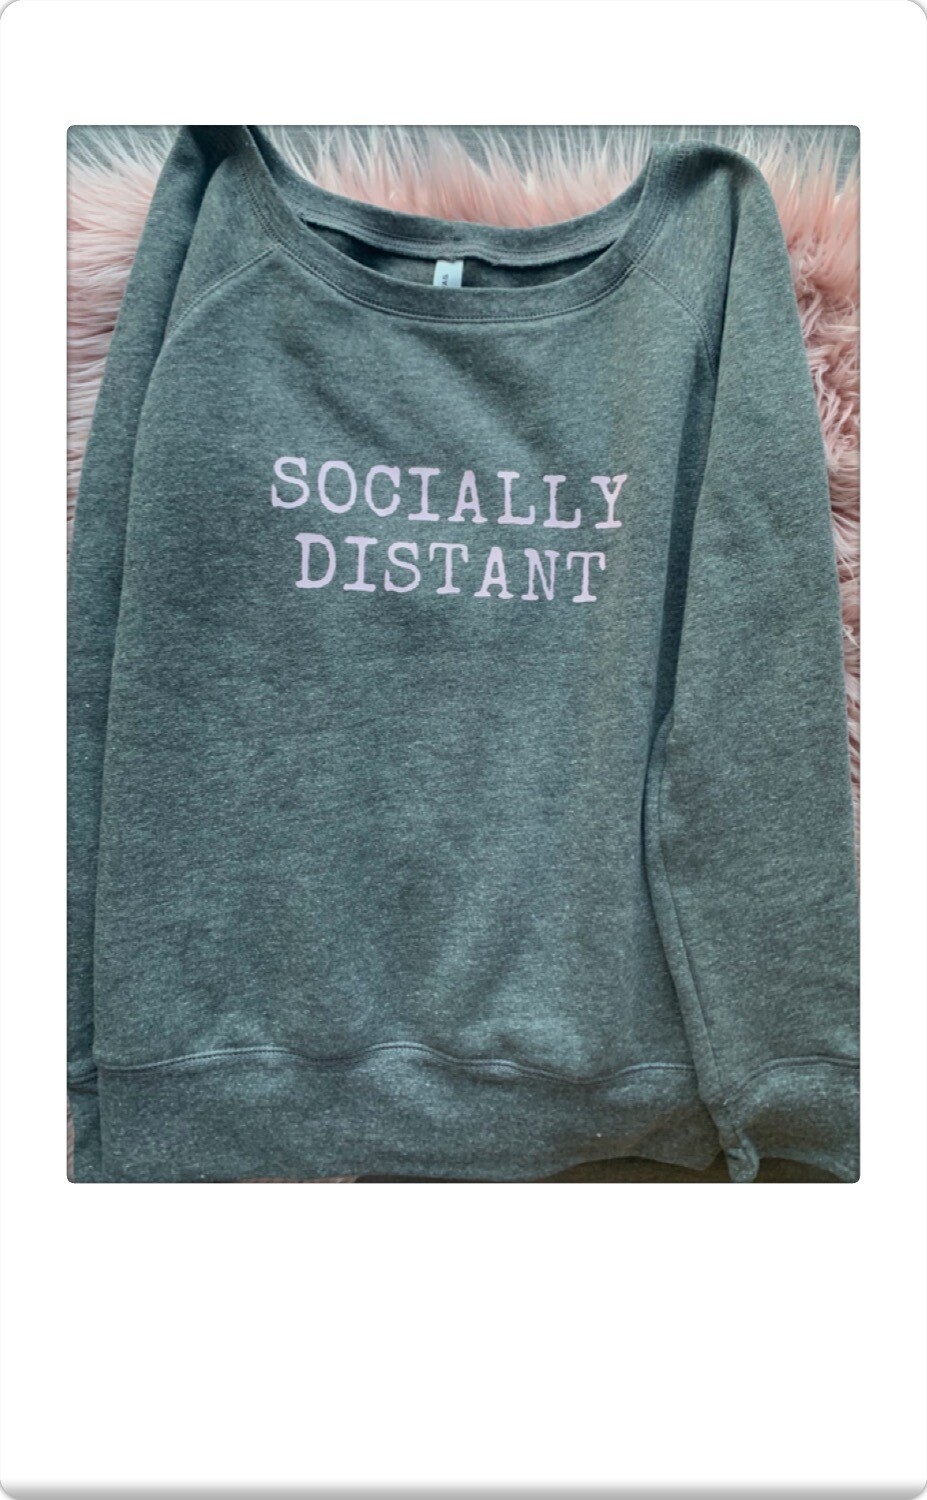 Socially distant sweatshirt